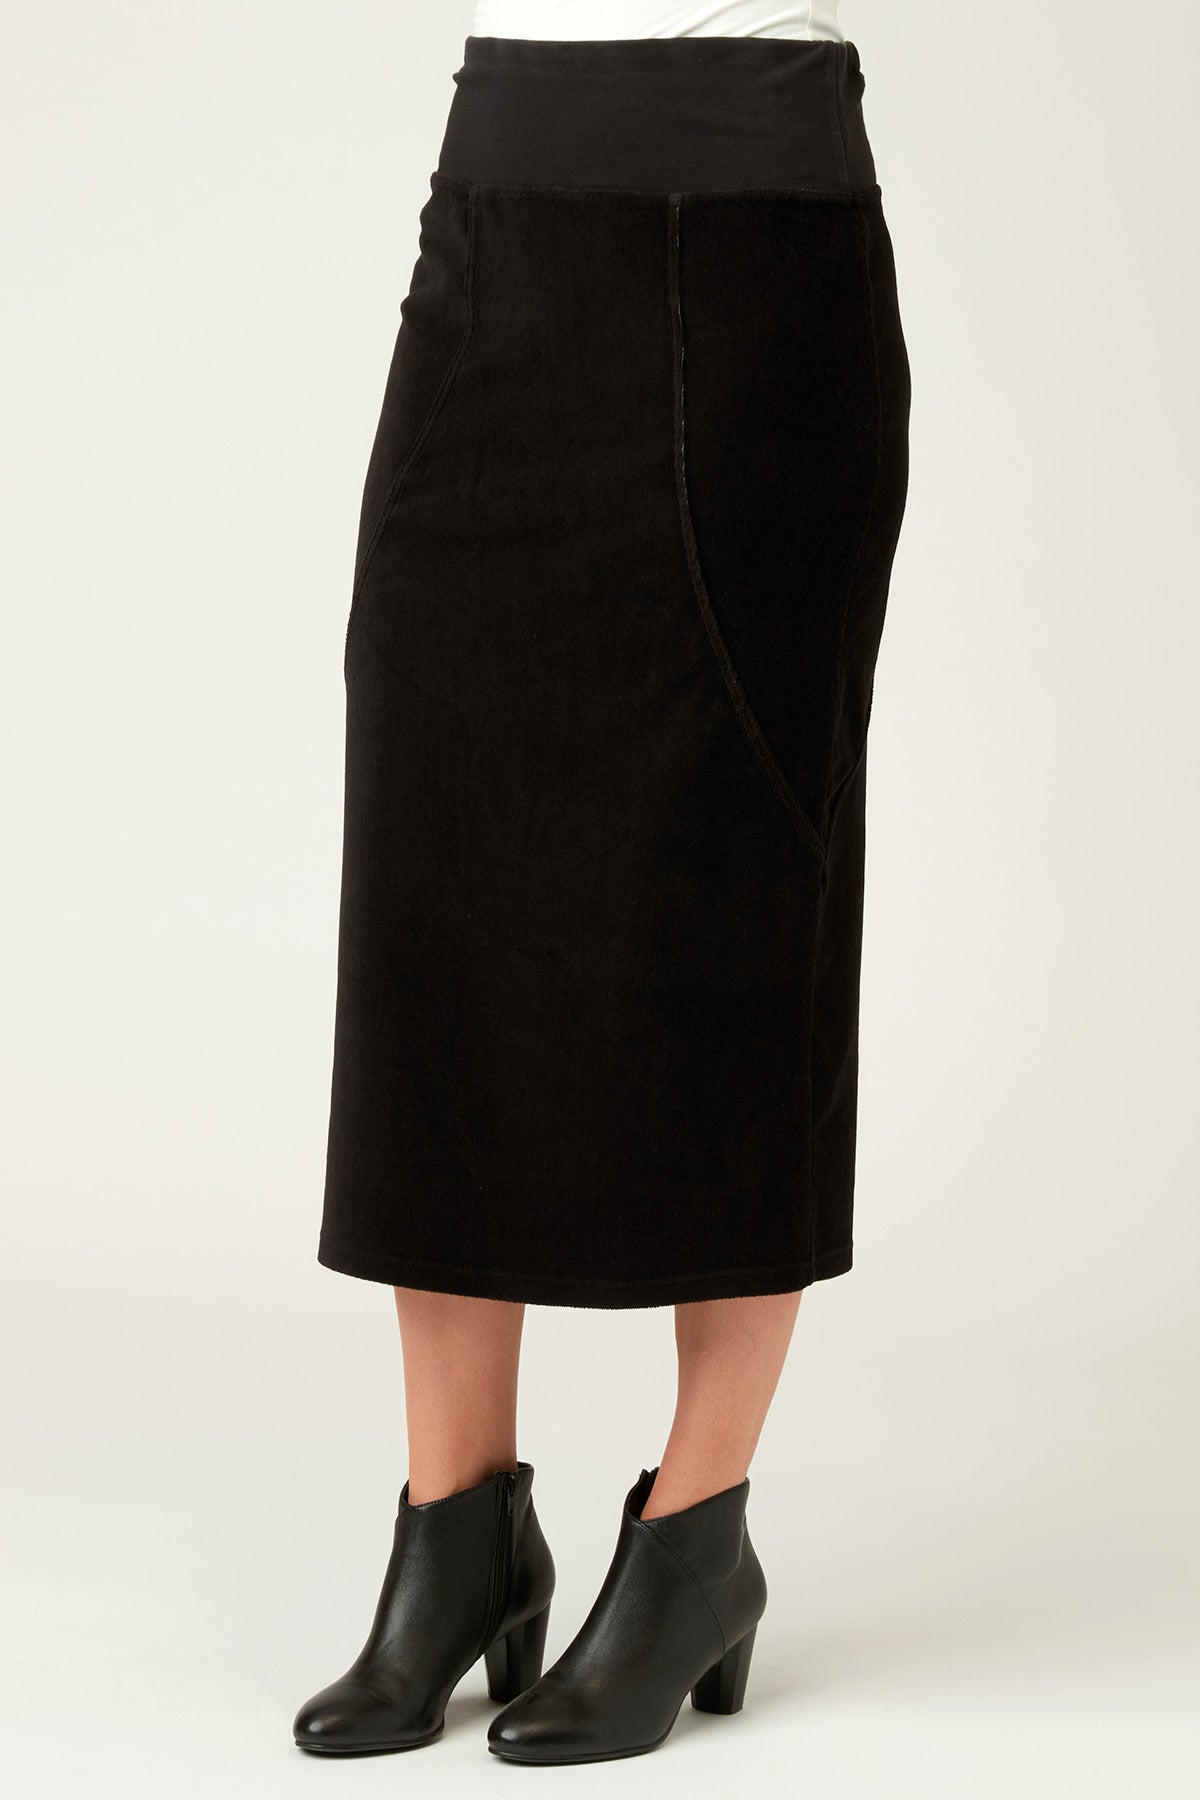 Xcvi Blair Pencil Skirt In Black